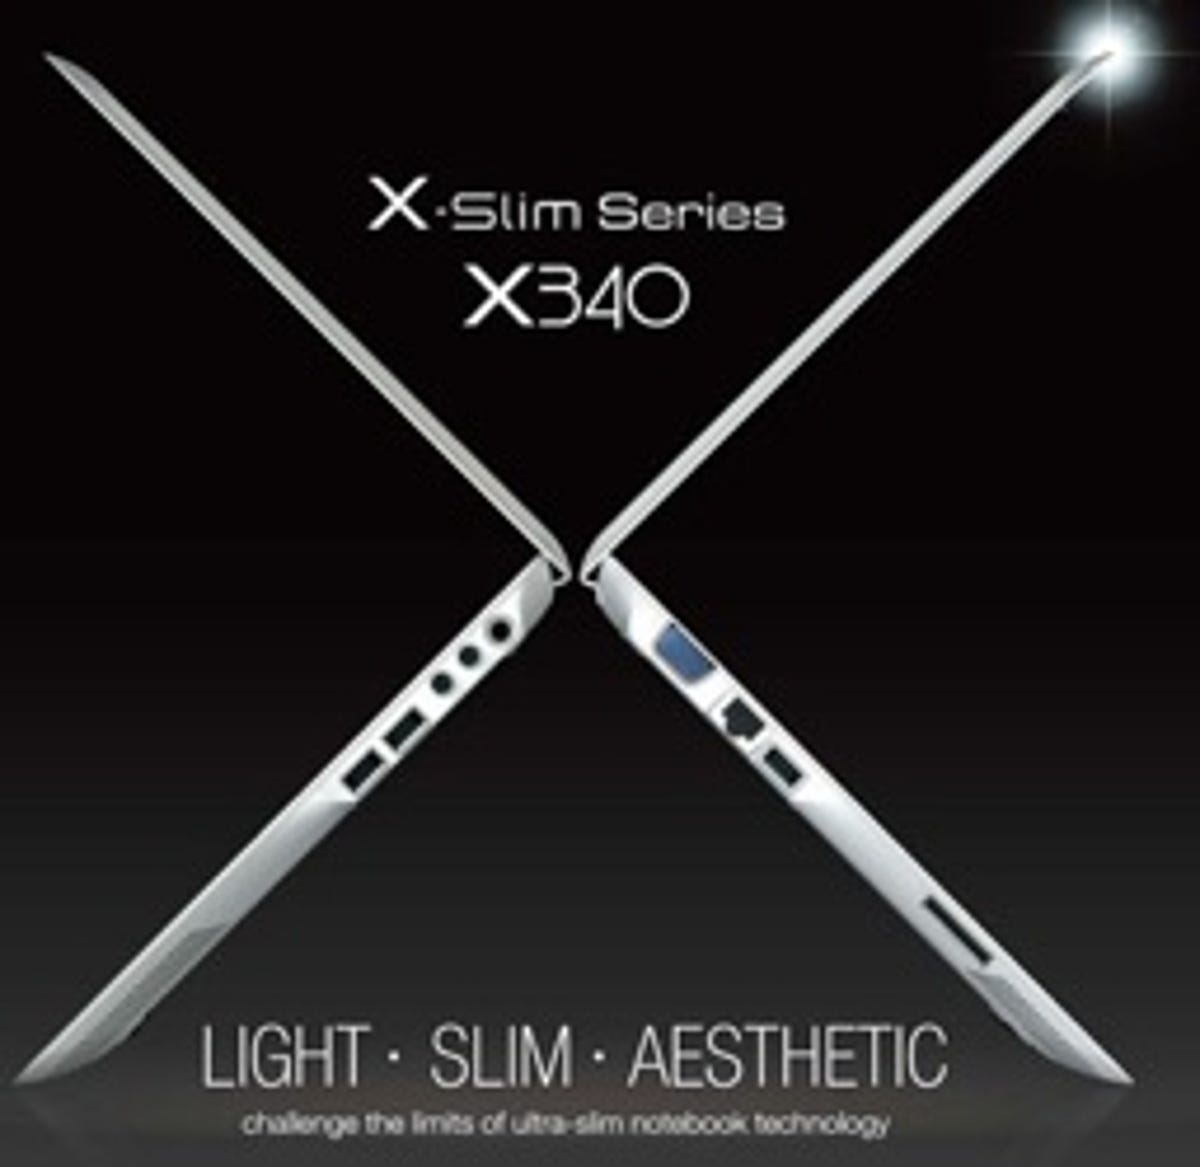 The MSI X-Slim series